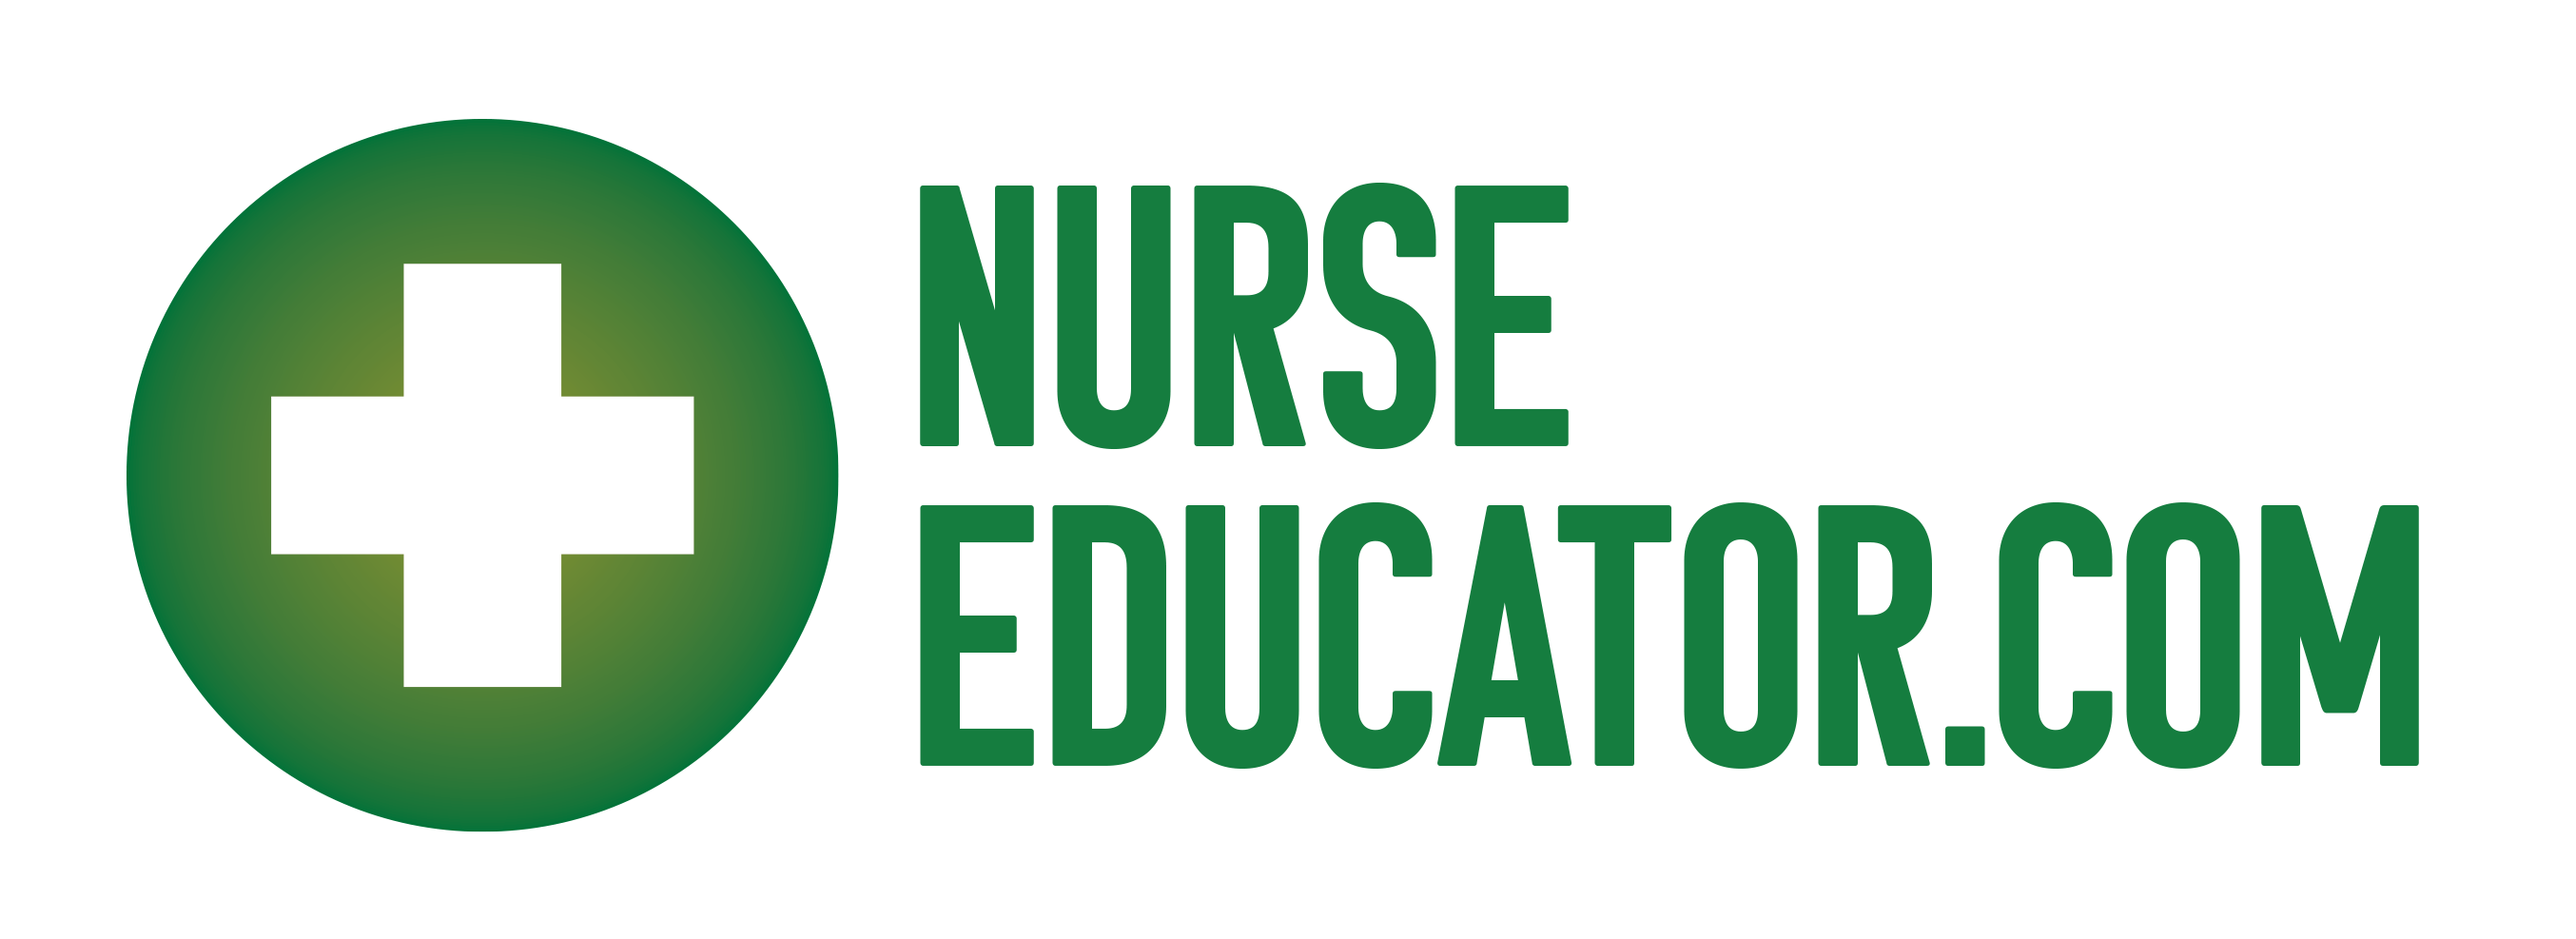 phd nursing education